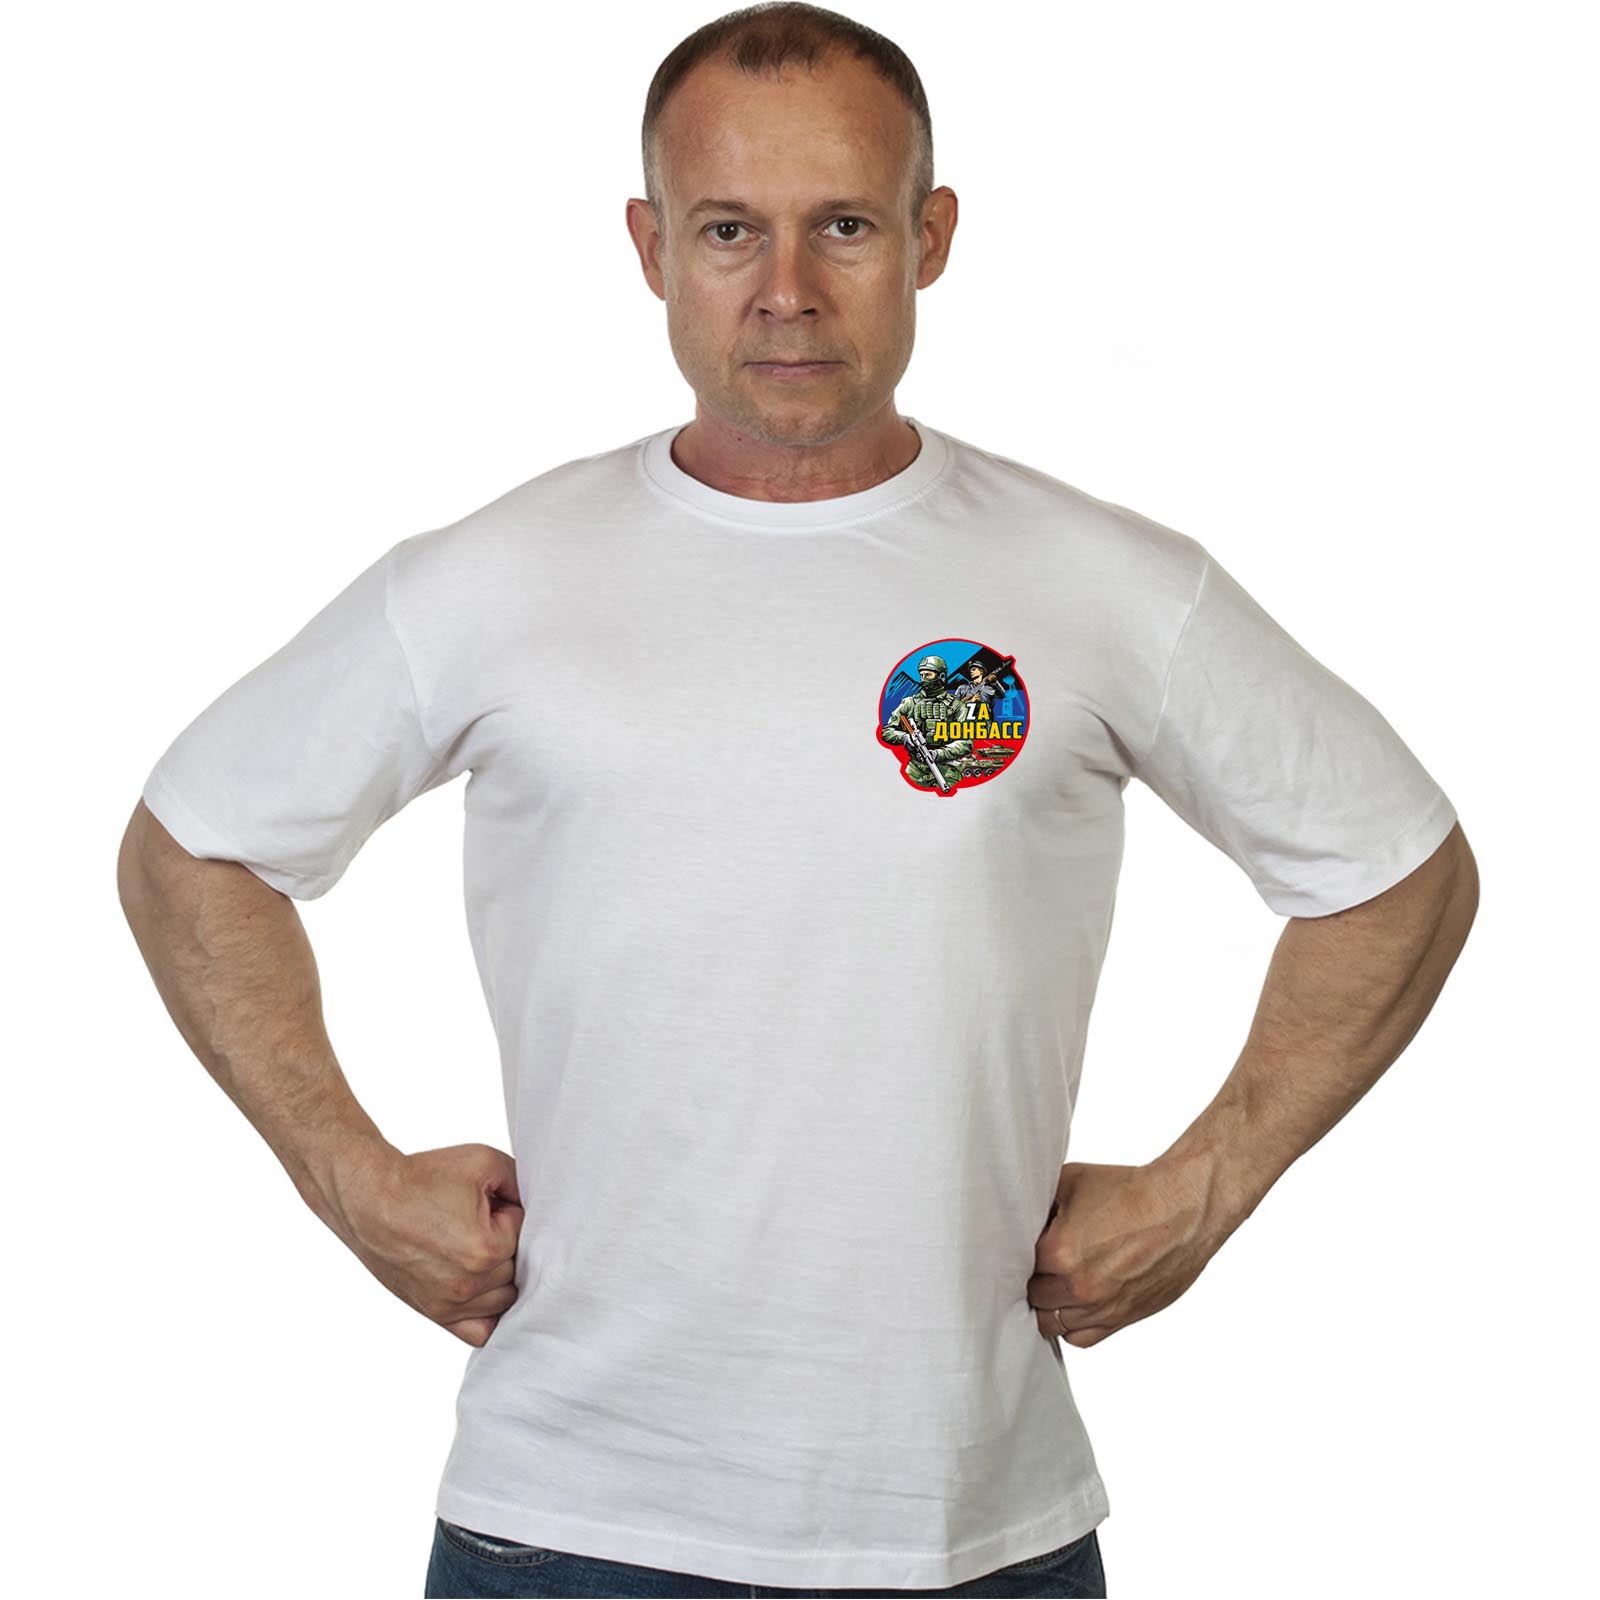 Недорогие мужские футболки Zа Донбасс